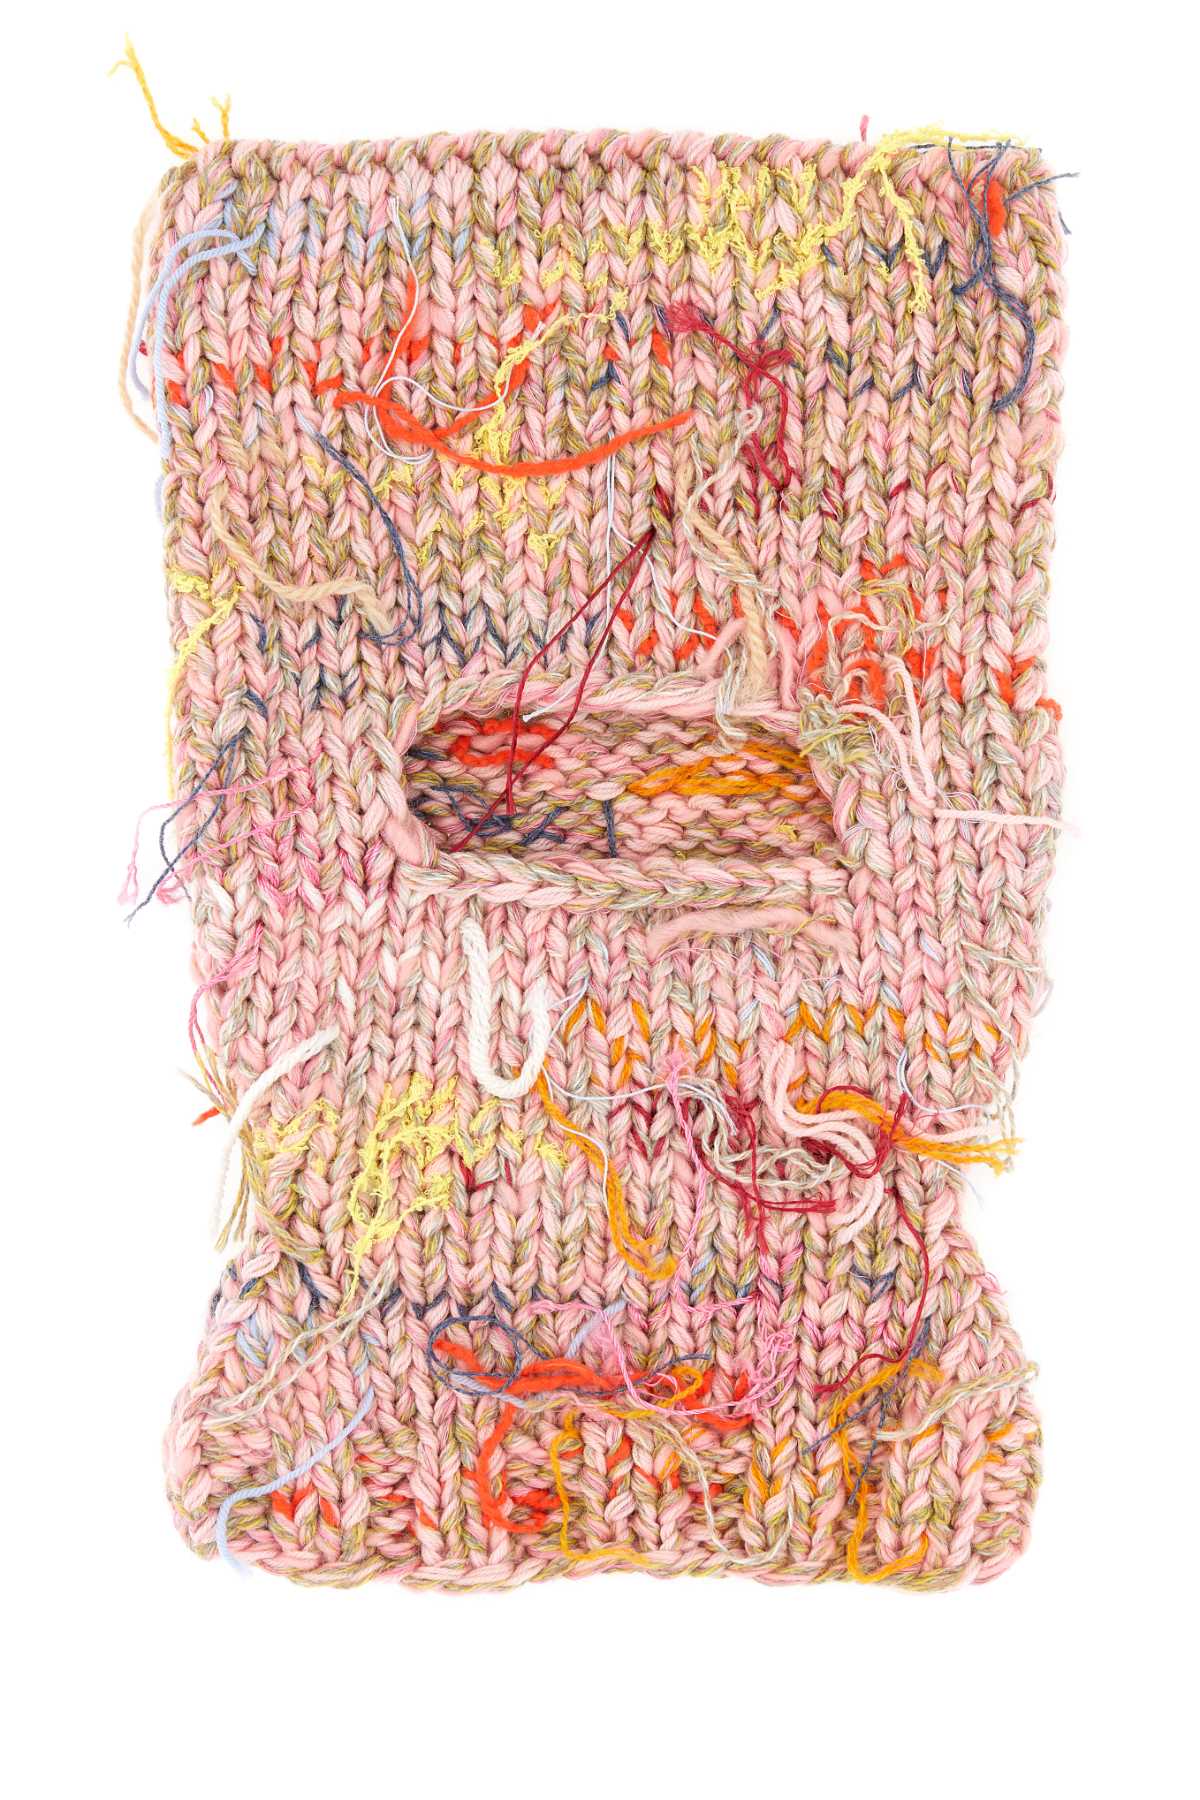 Crochet Balaclava